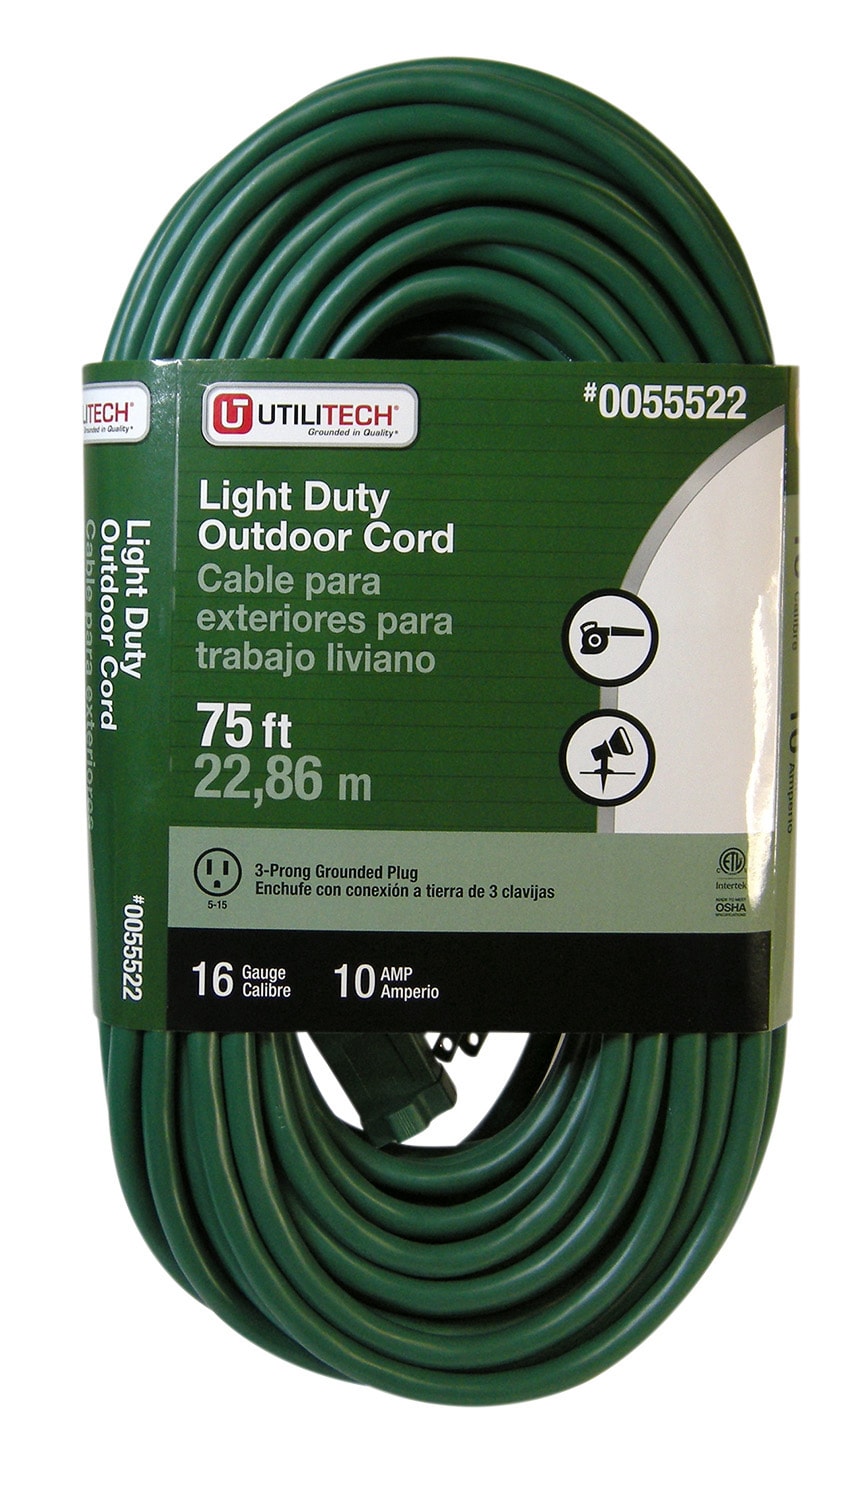 Cable alargador de Holiday Lighting Outlet para interiores o exteriores de  16/3, 3 tomas de corriente, 3 clavijas, certificación UL